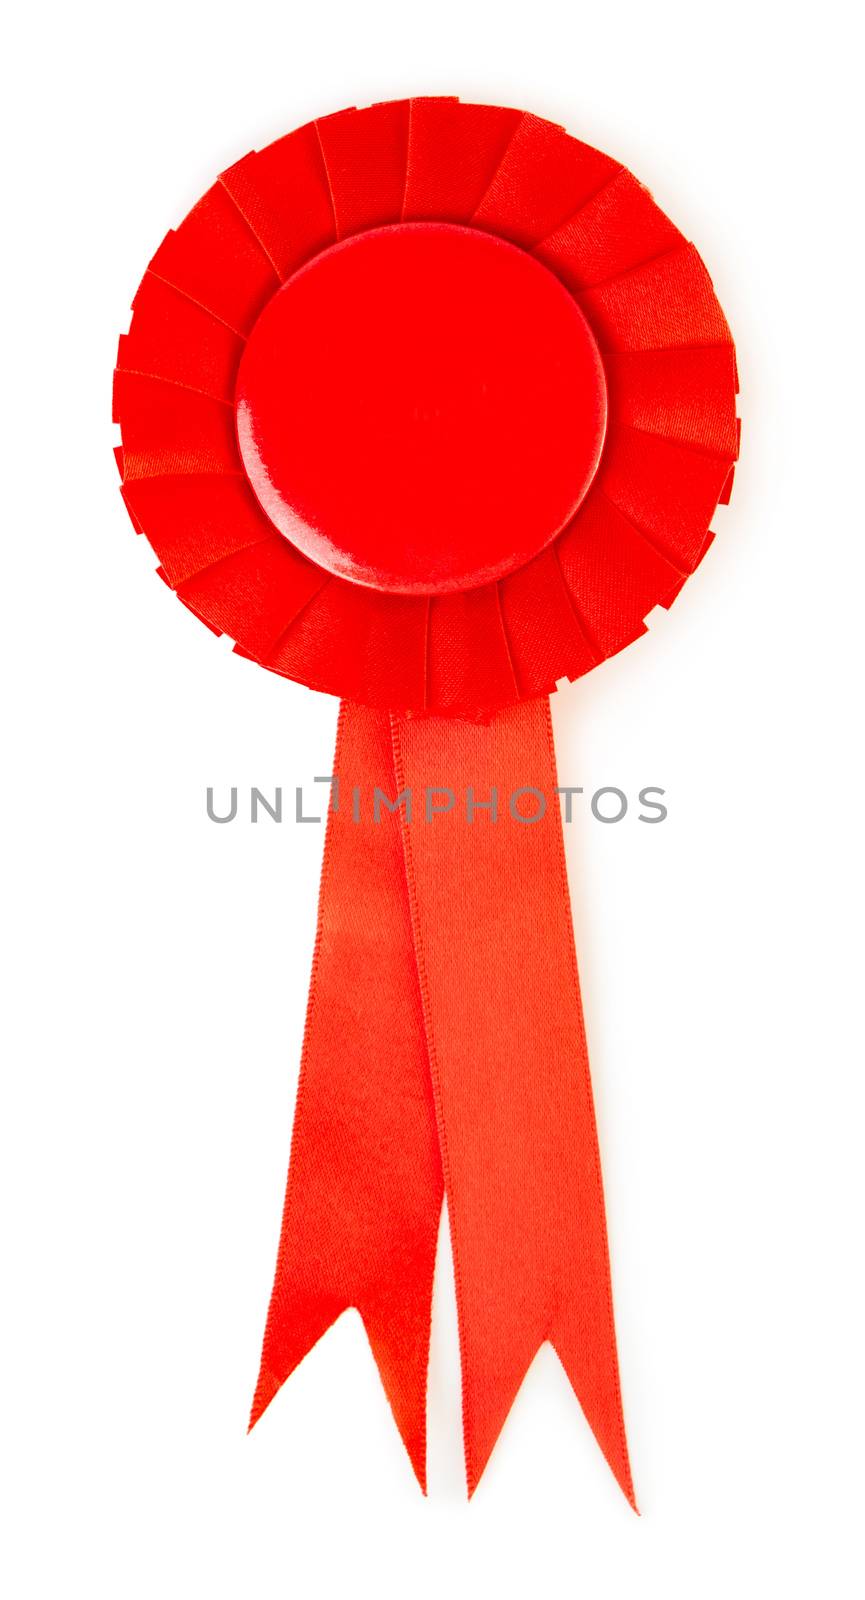 Blank red award winning ribbon rosette isolated on white background